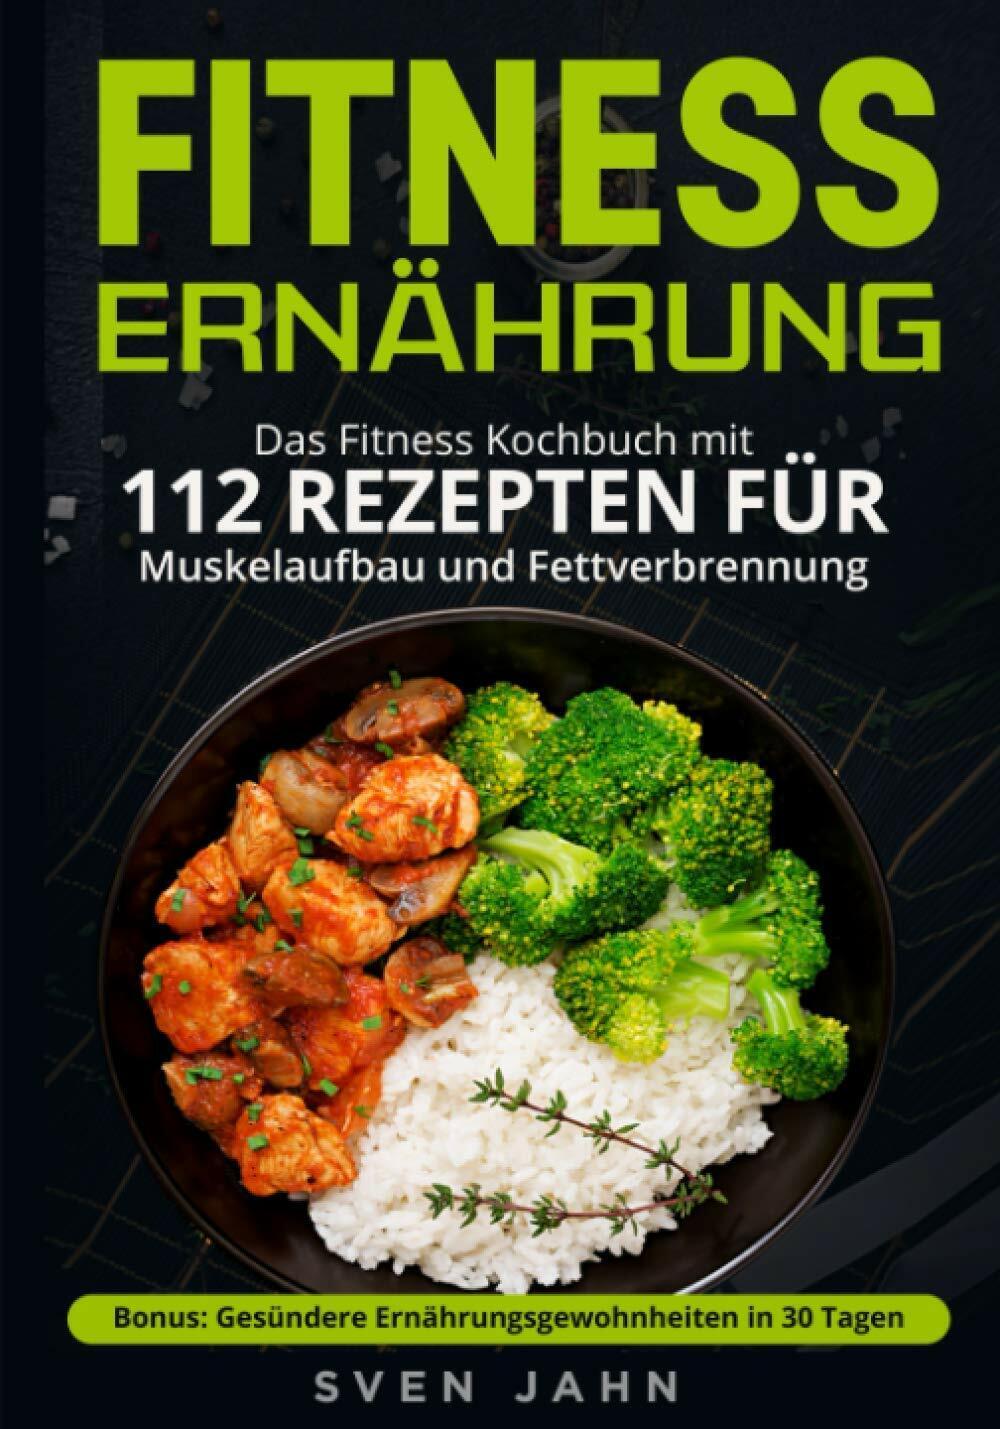 Fitness Ern?hrung Das Fitness Kochbuch Mit 112 Rezepten F?r Muskelaufbau und Fet